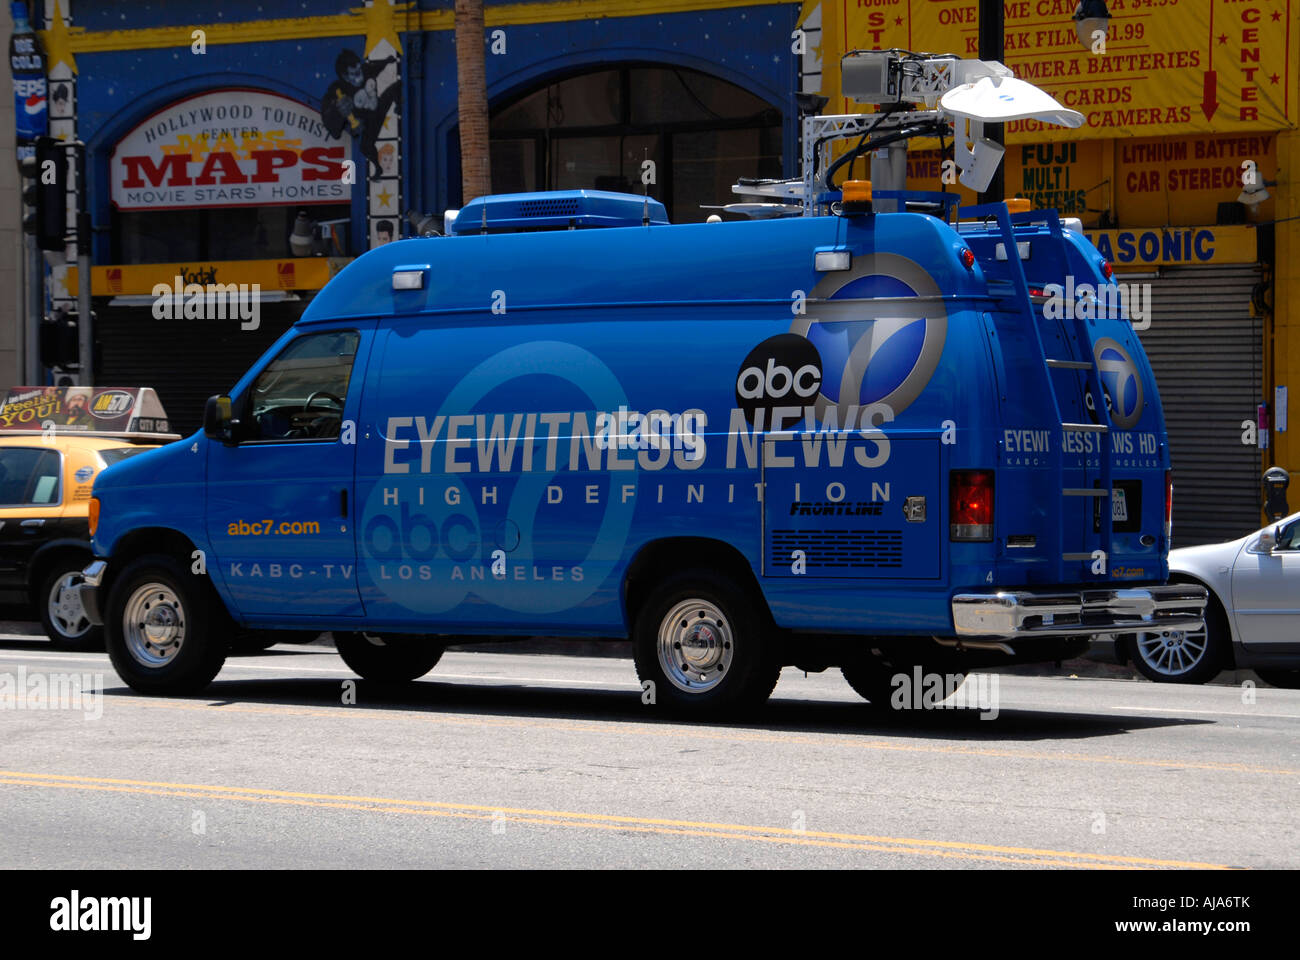 Testigo presencial de ABC News satellite Outside Broadcast van usada para transmitir en directo la cobertura televisiva de las cámaras ENG, Hollywood, California Foto de stock